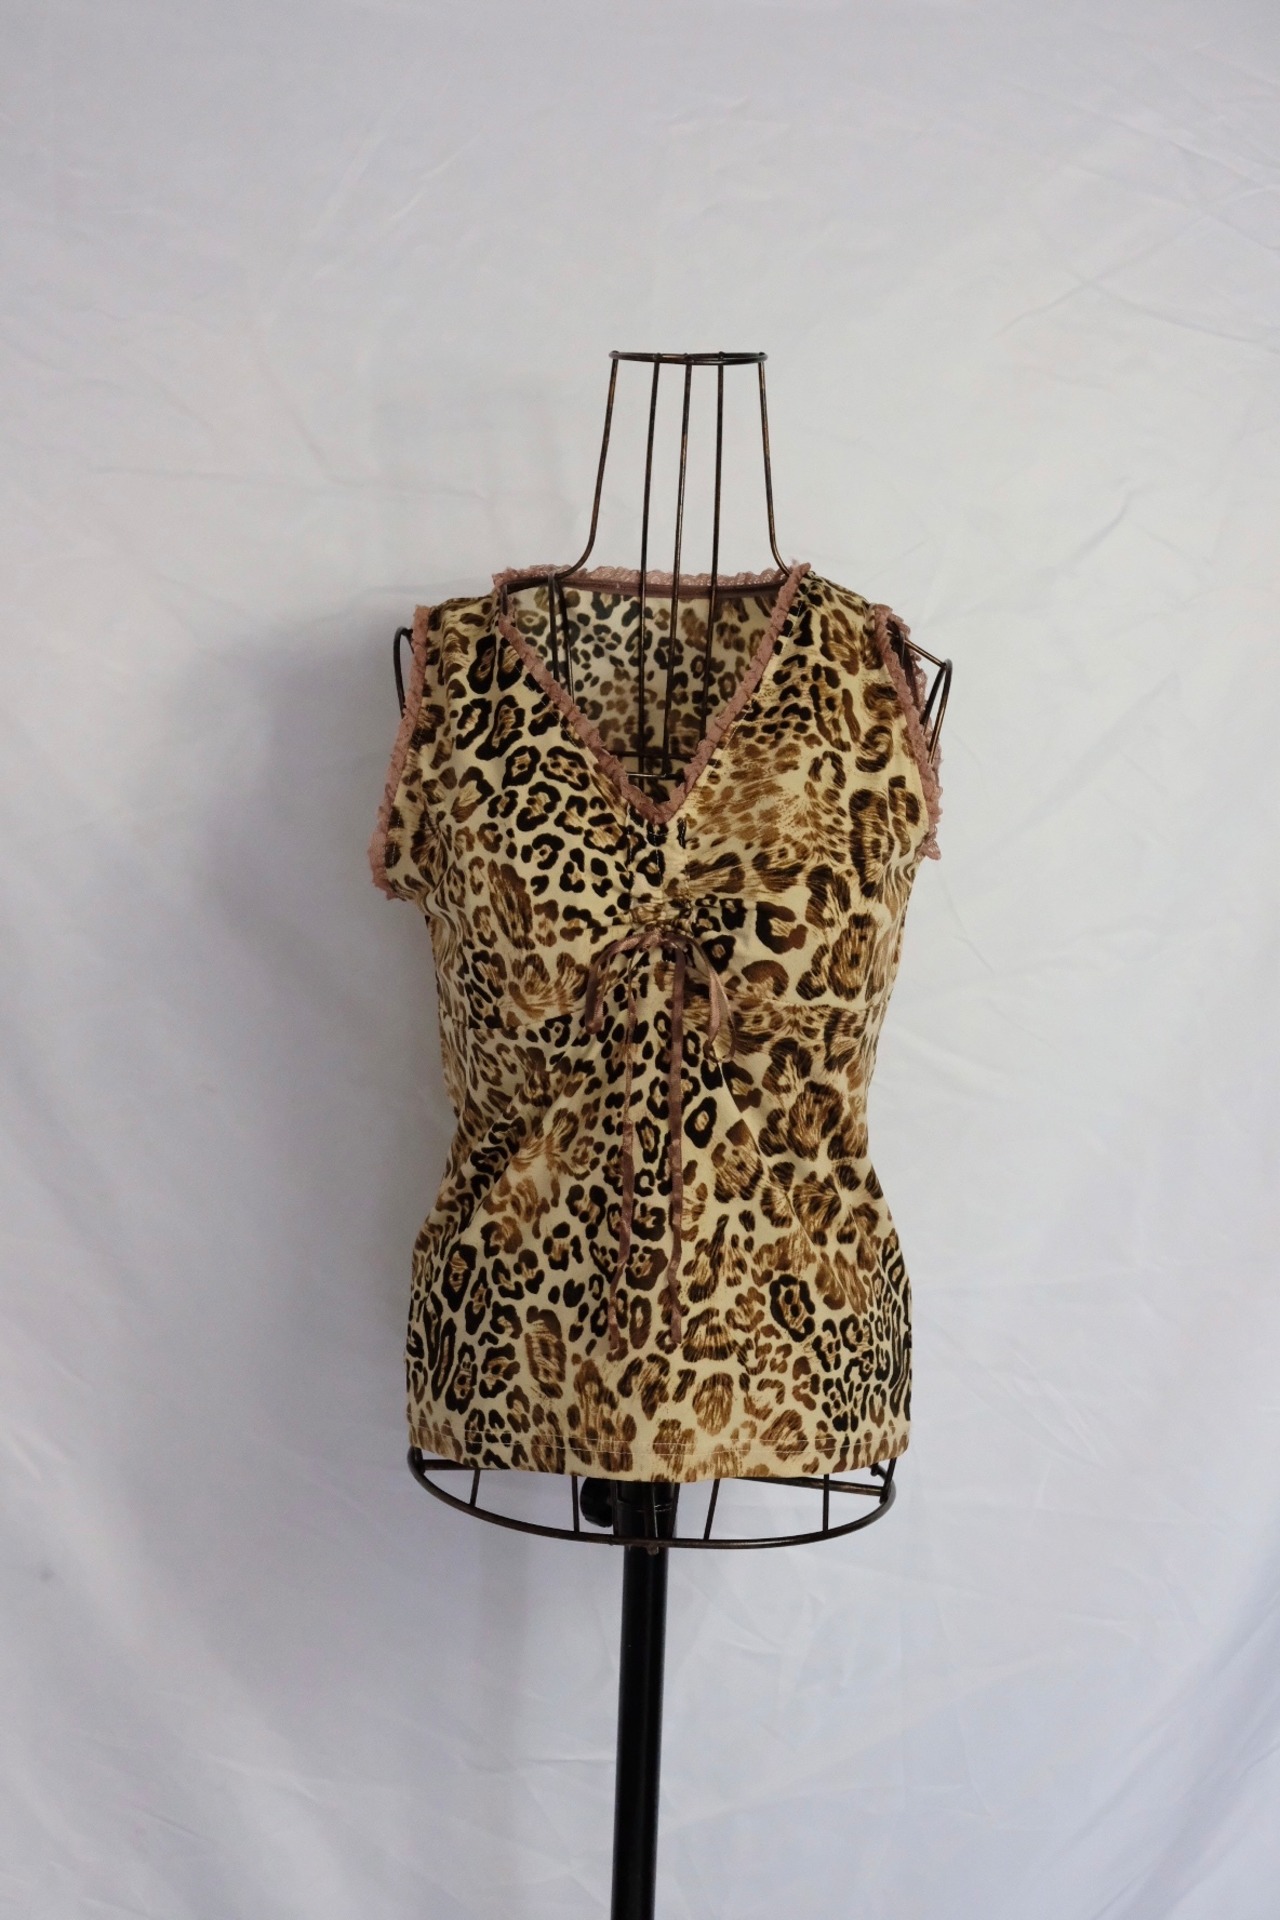 Leopard pattern sleeveless top